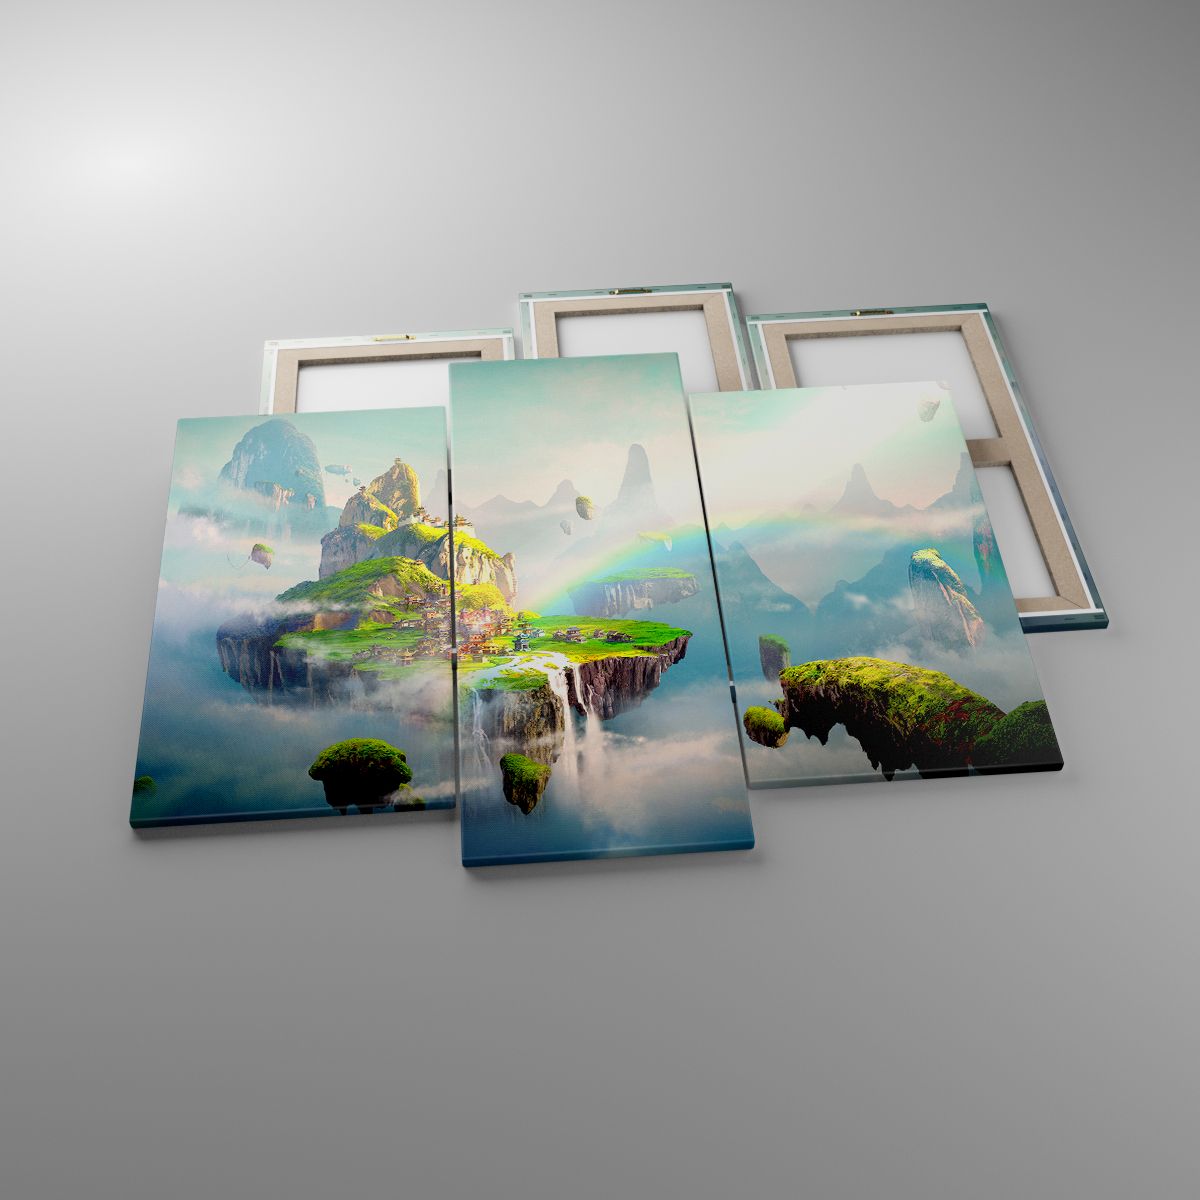 Leinwandbild Fantastisch, Leinwandbild Abstraktion, Leinwandbild Landschaft, Leinwandbild Regenbogen, Leinwandbild Wasserfall